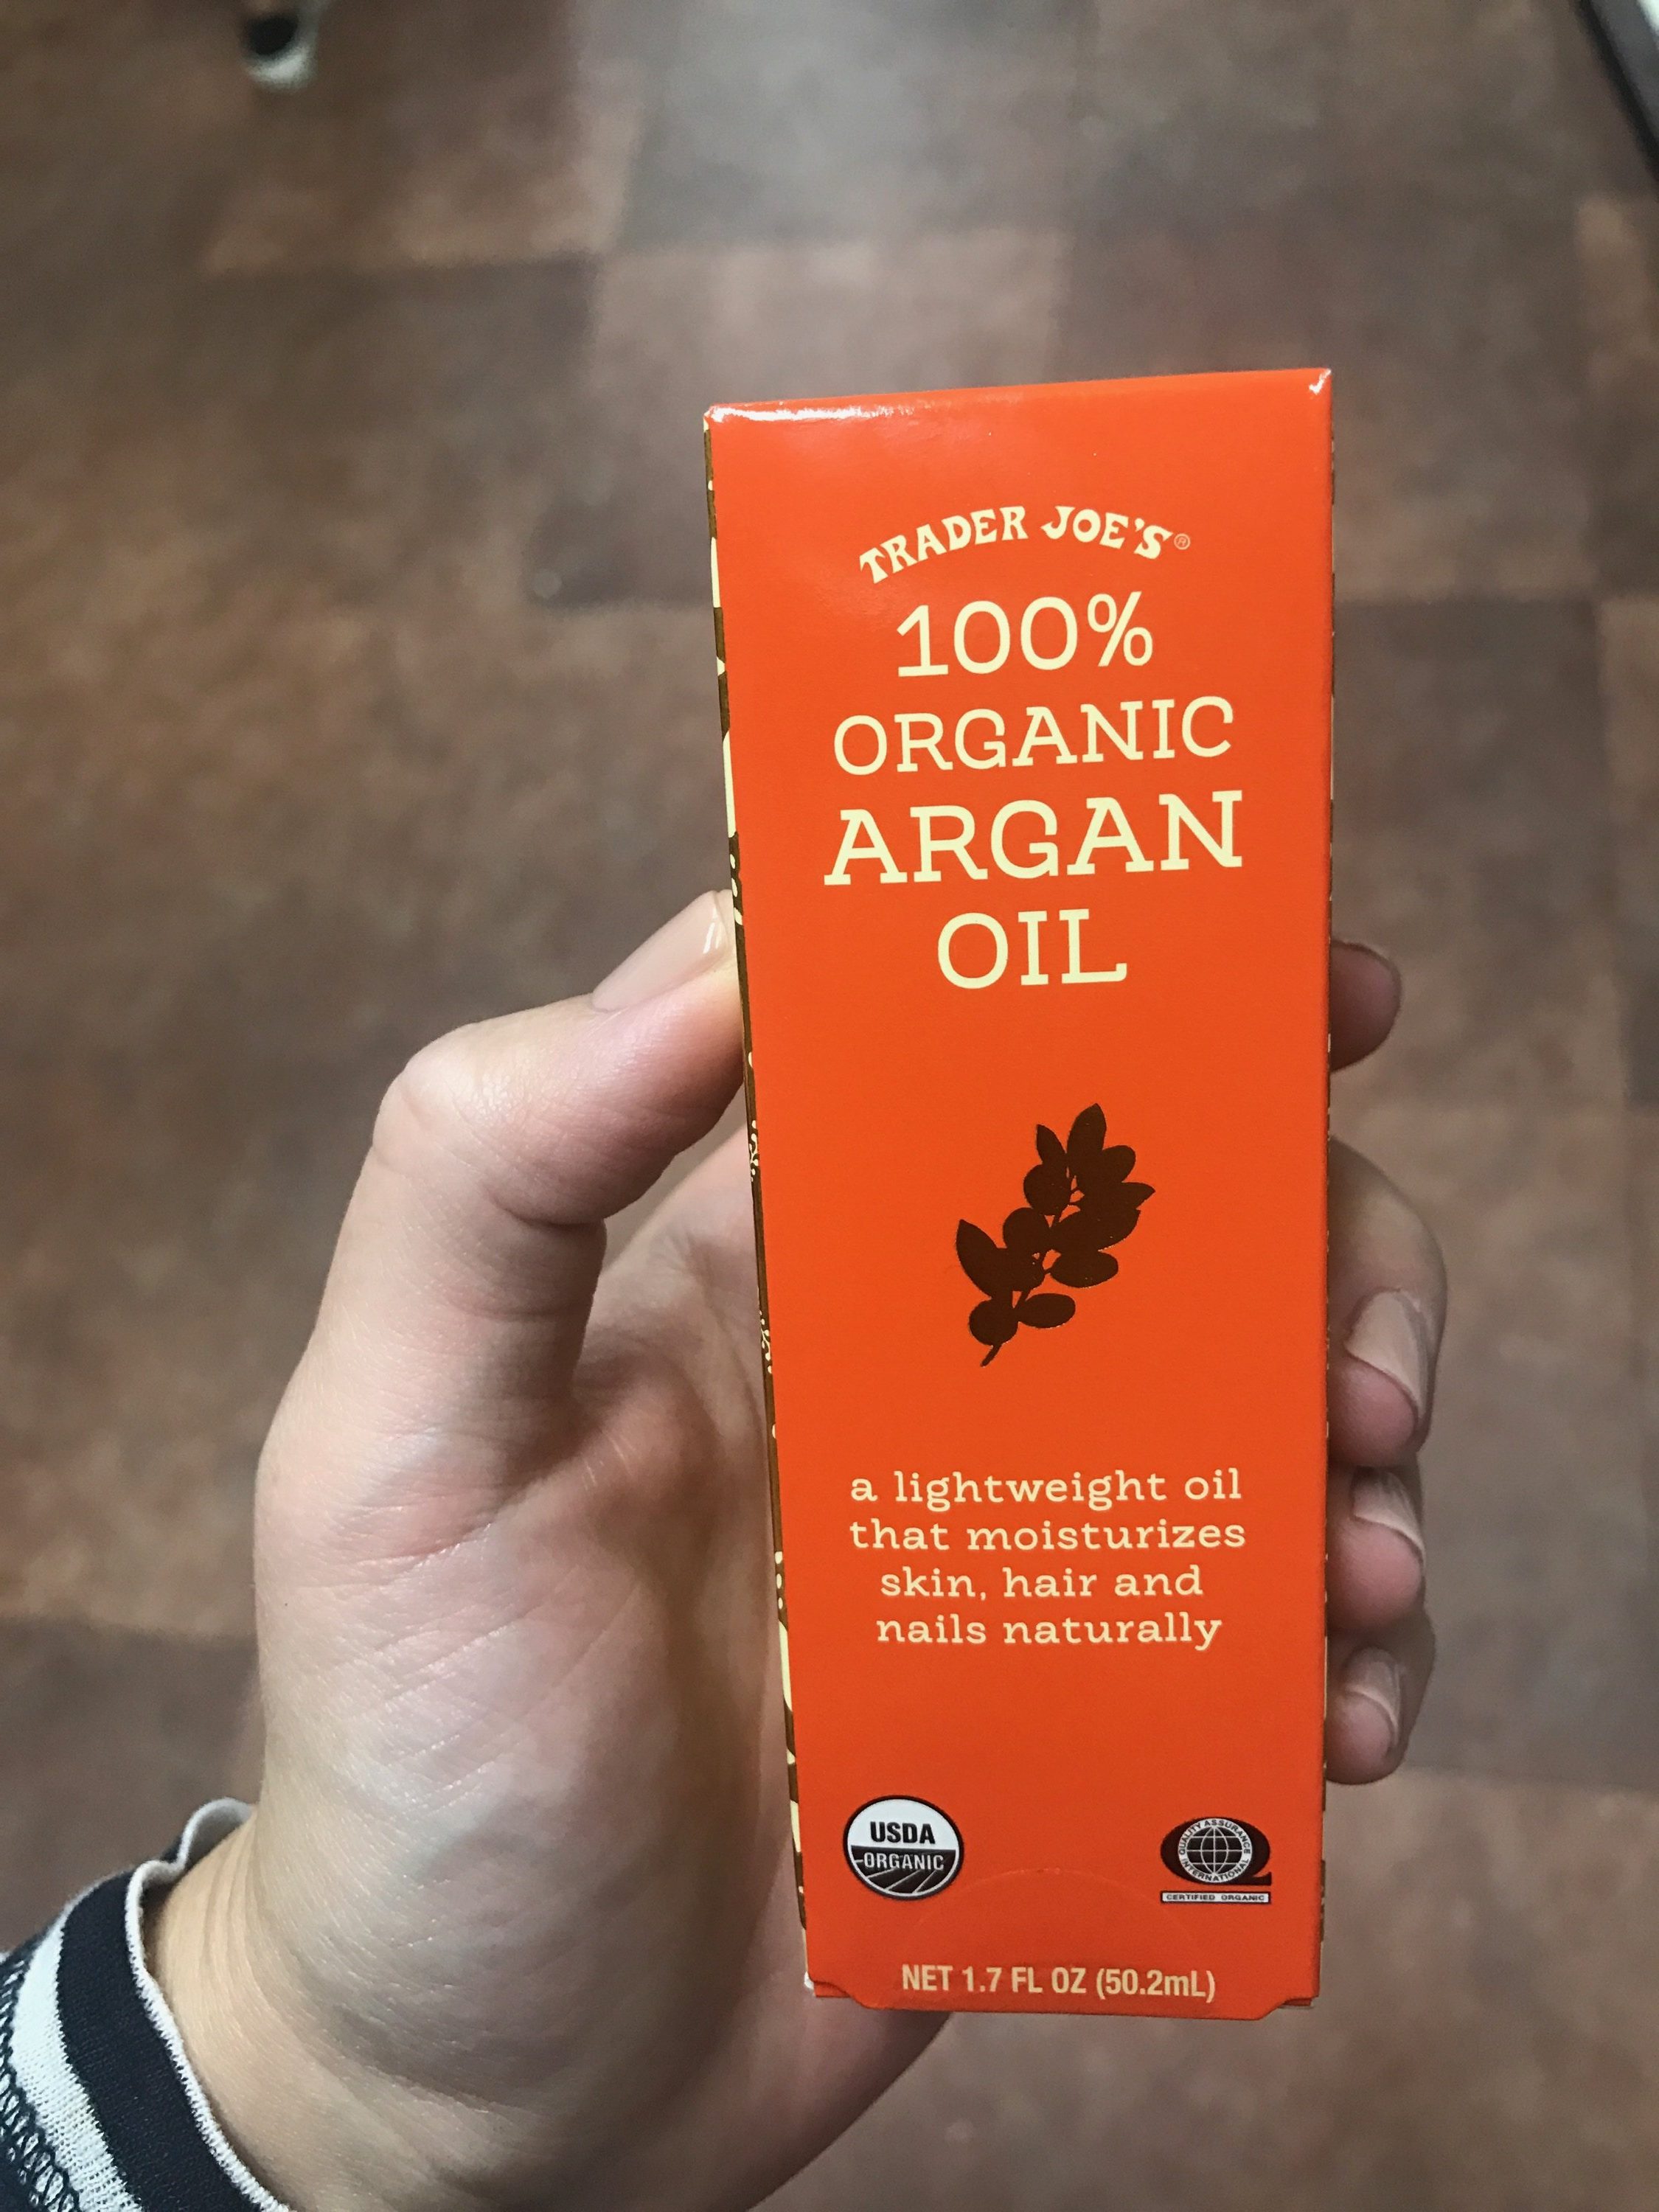 Organic Argan Oil, $6.99